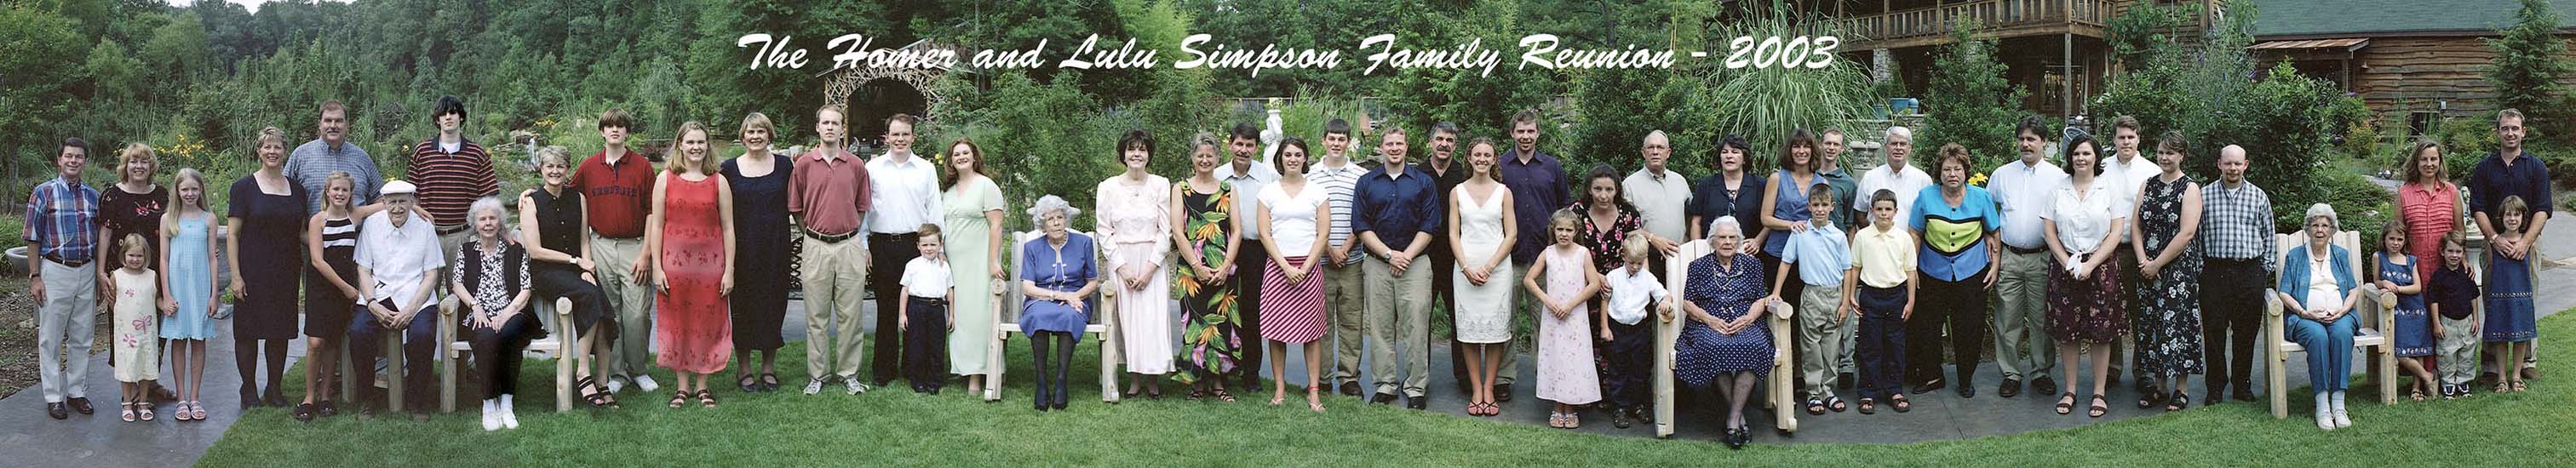 Simpson_Family_Reunion_Photograph